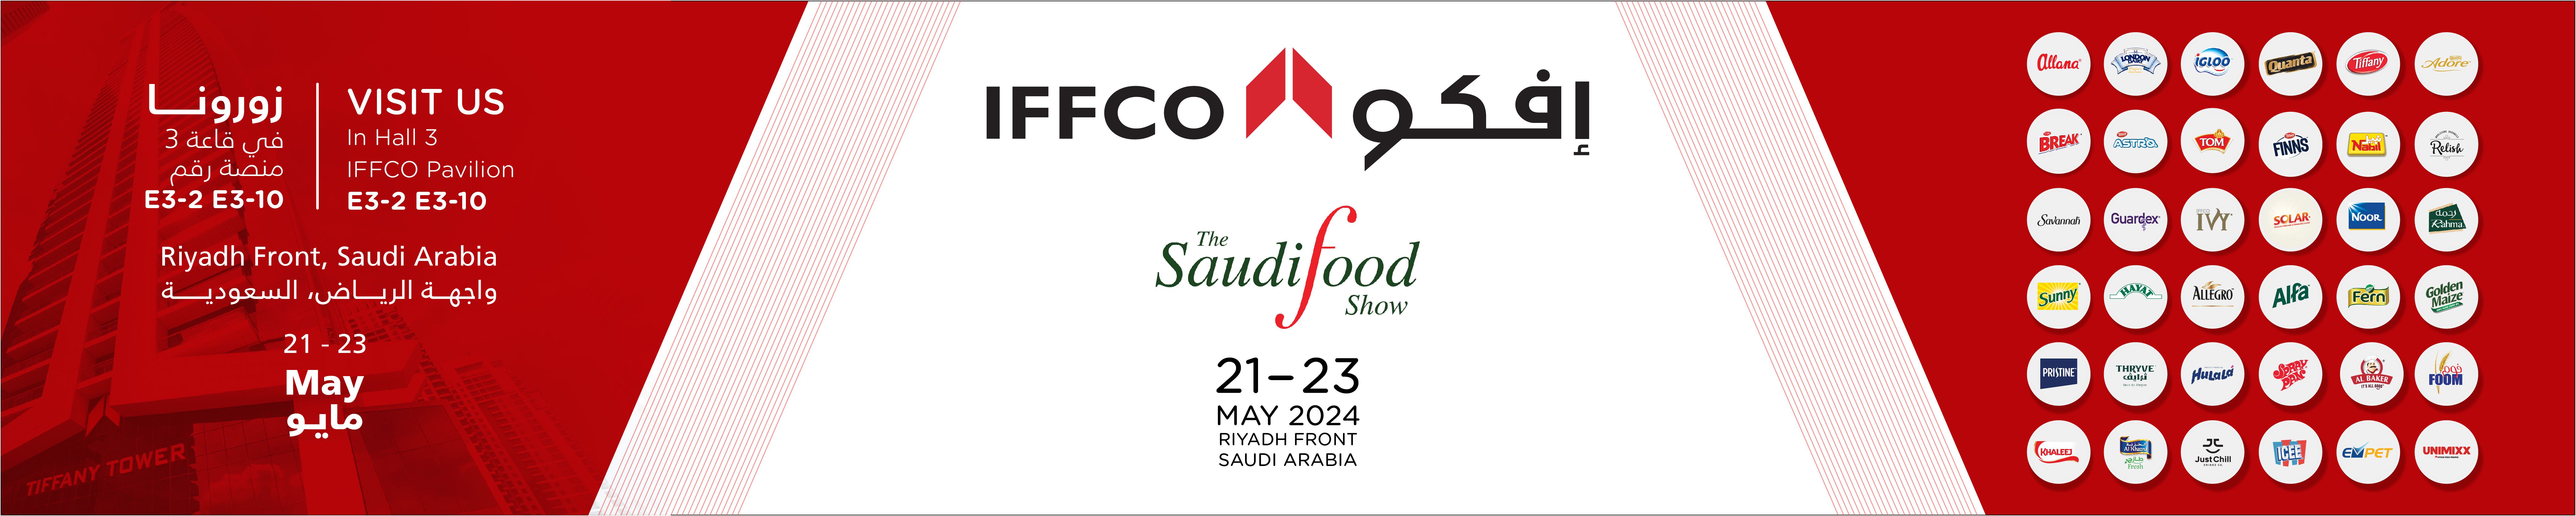 IFFCO Banner - Sponsor for The Saudi Food Show